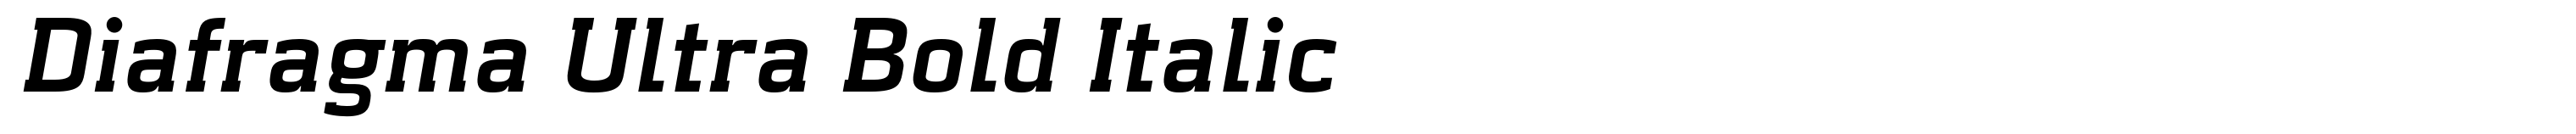 Diafragma Ultra Bold Italic